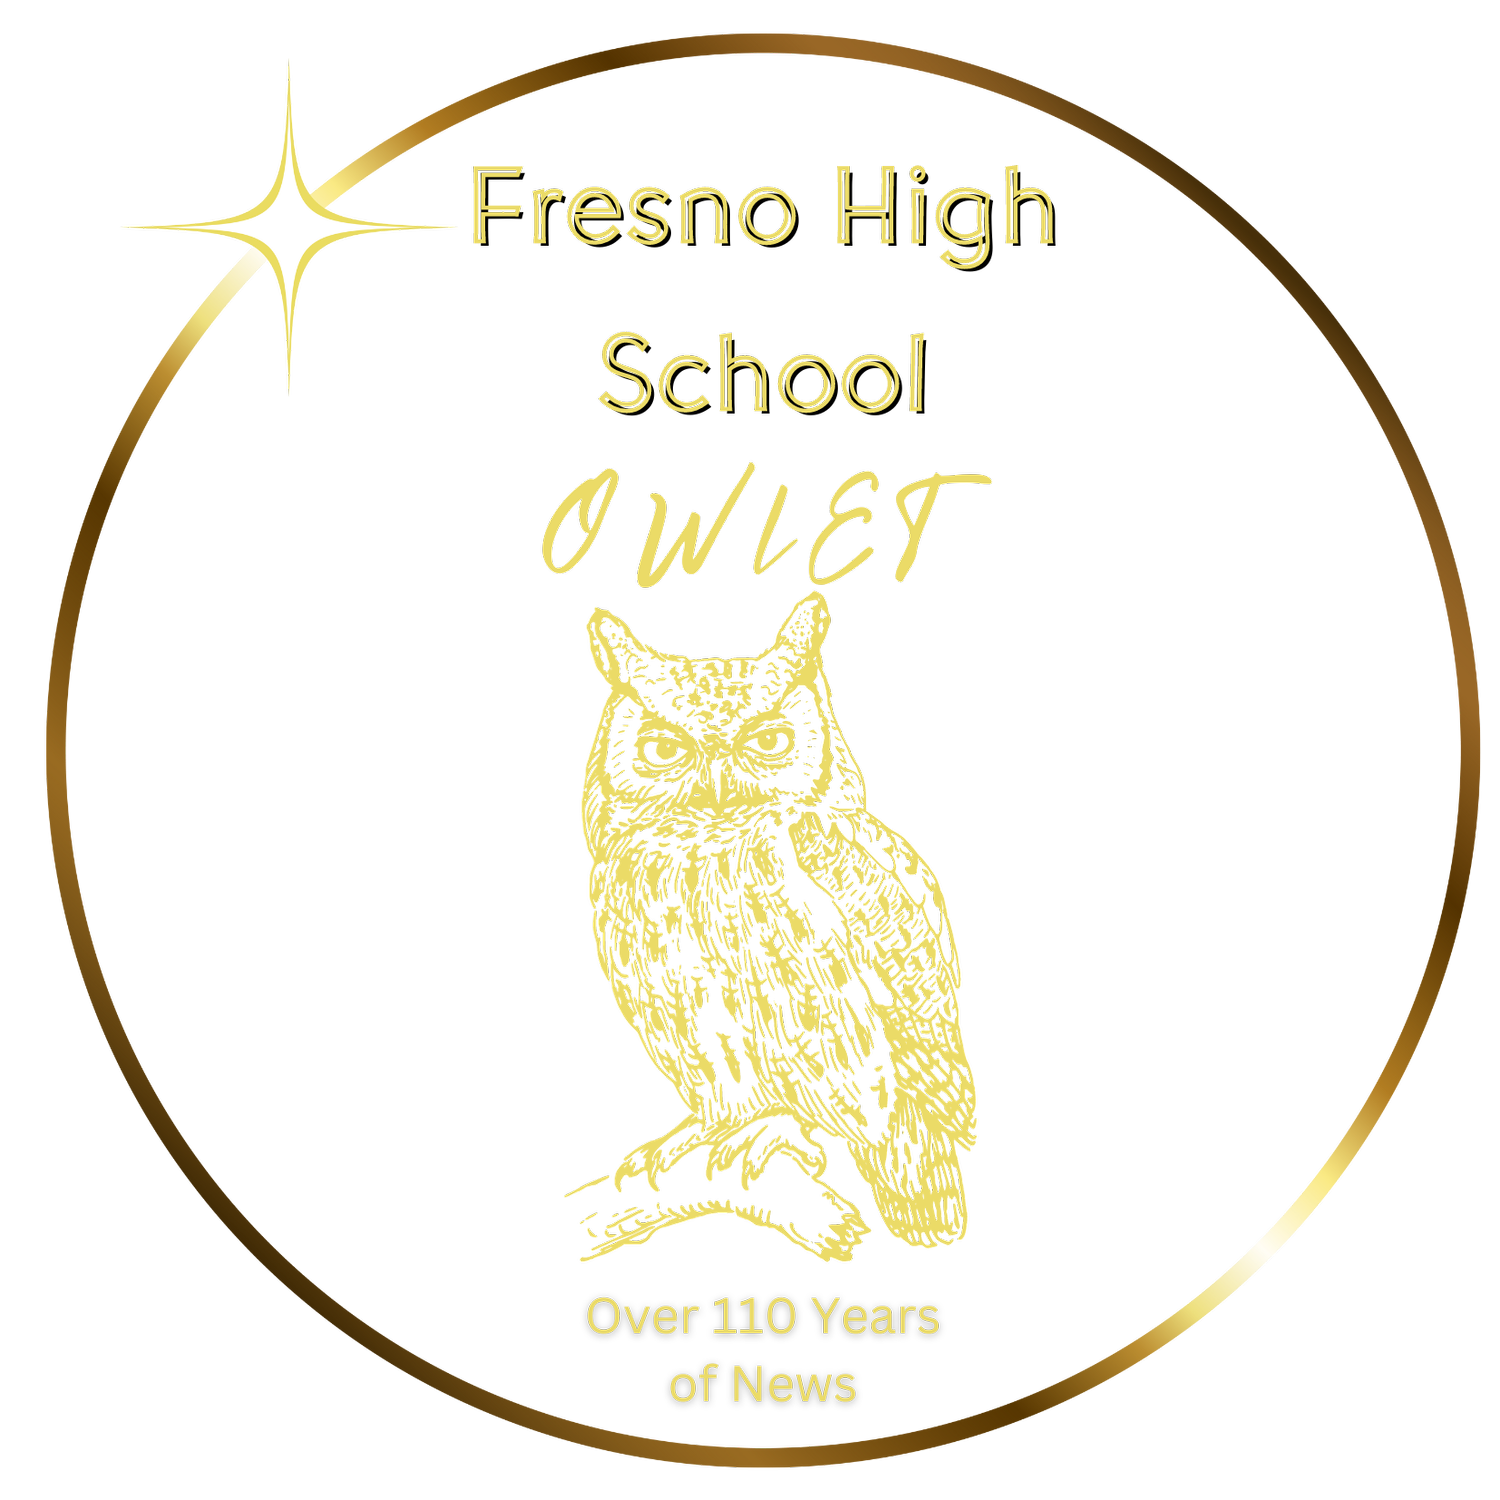 The Fresno High Owlet Online